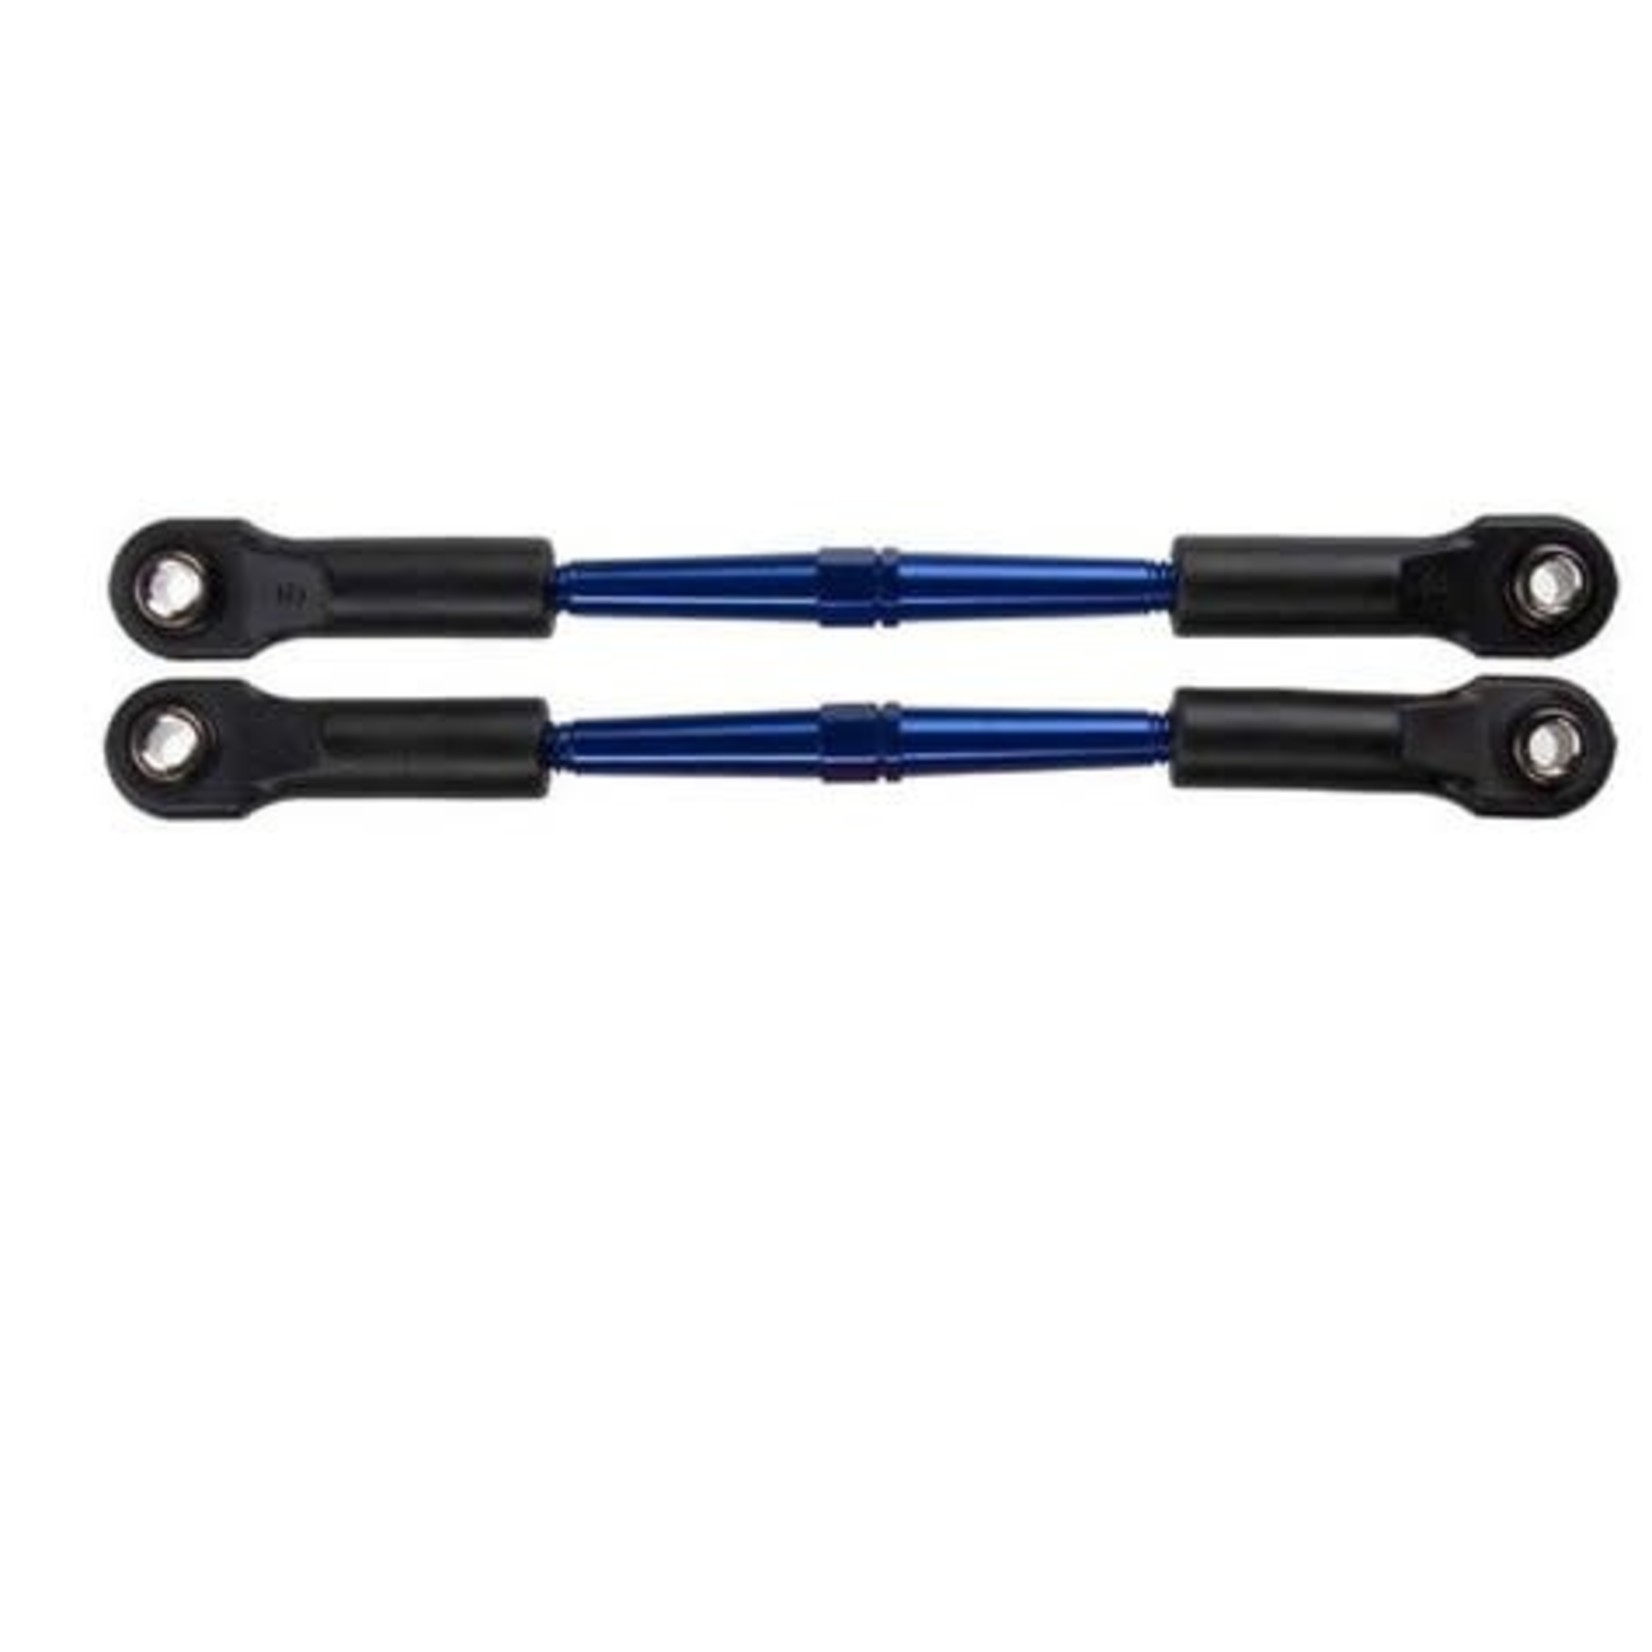 Traxxas Traxxas 59mm Aluminum Turnbuckle Toe Link (Blue) (2) #3139A